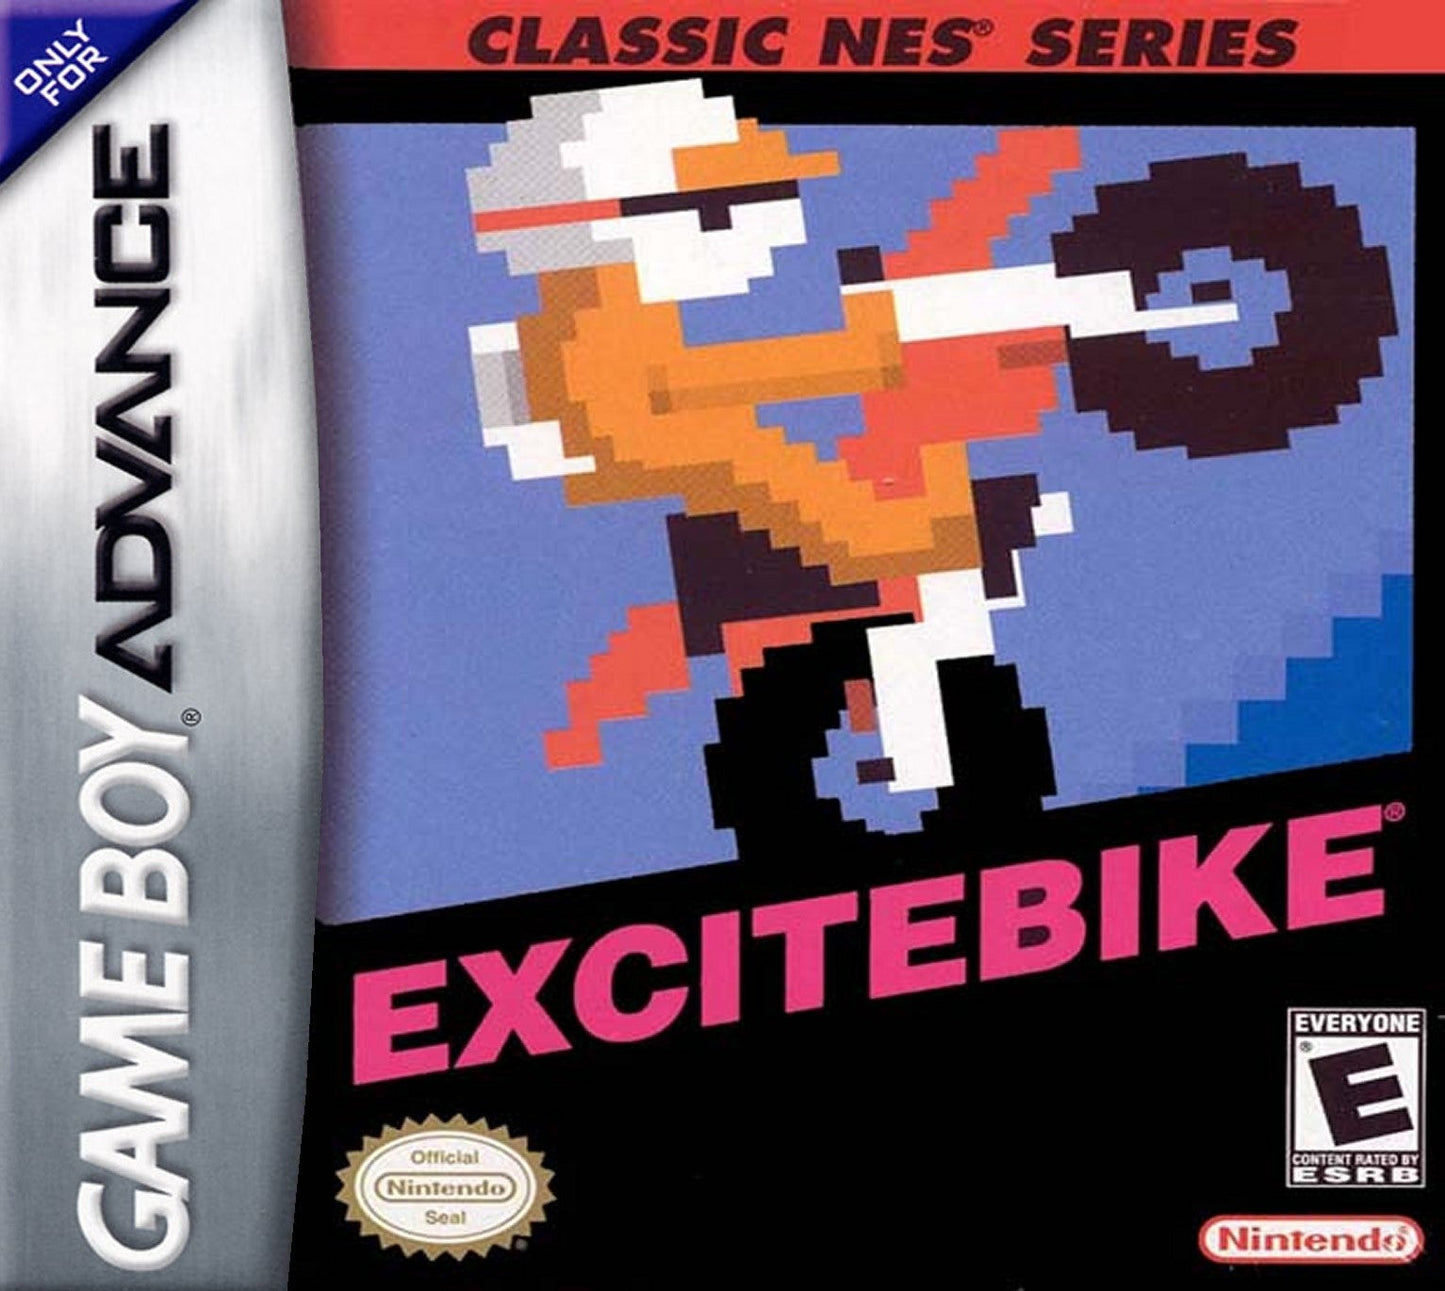 Excitebike: Classic NES Series